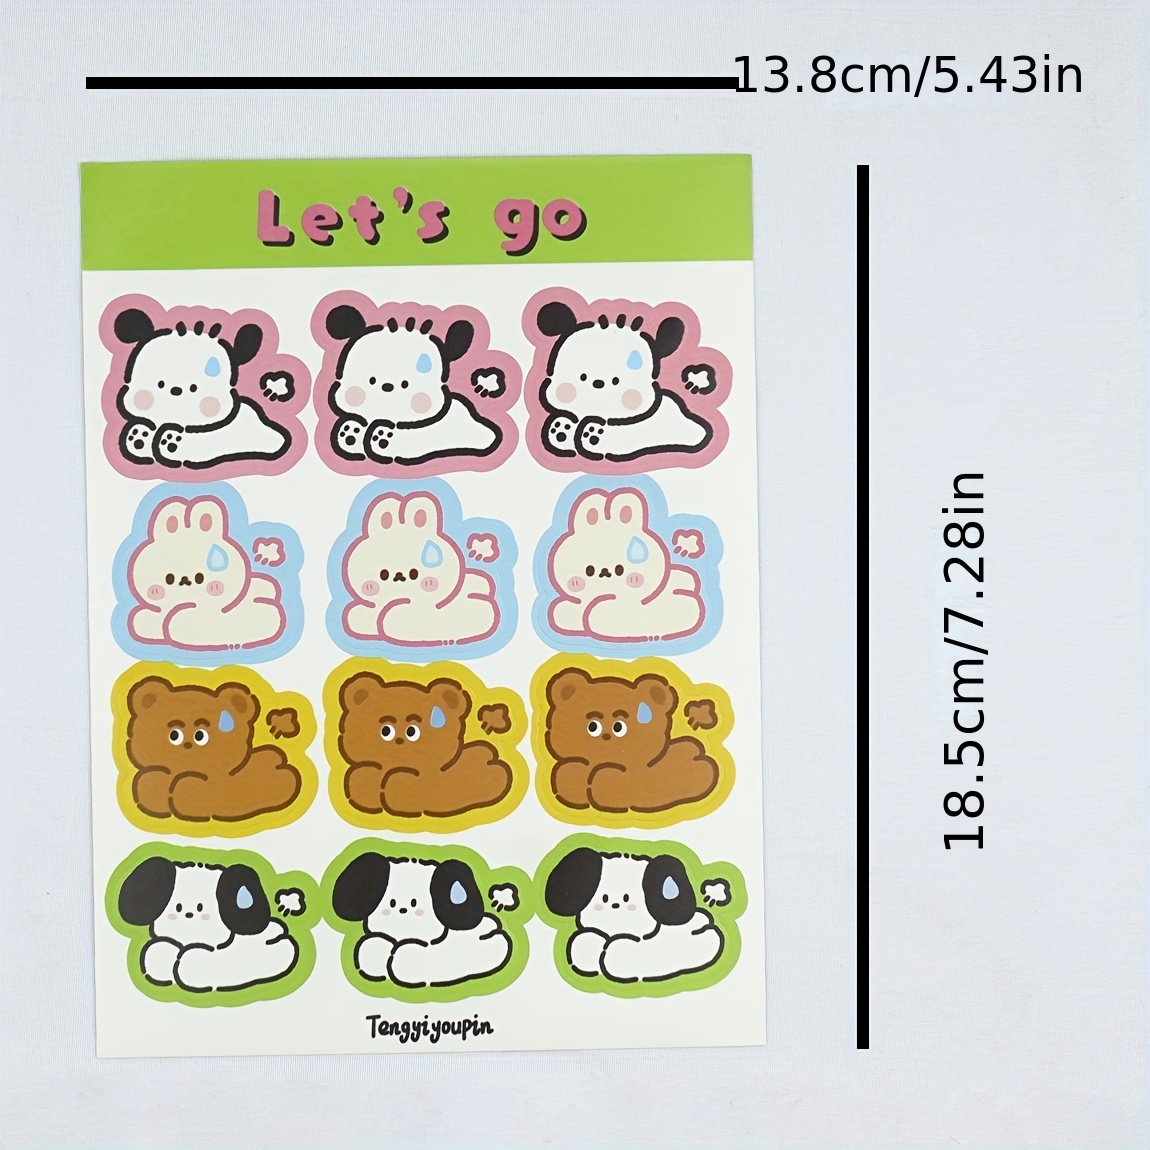 BUKE 45 Pcs/pack Cute Rabbit Daily Kawaii Decoration Stickers Planner